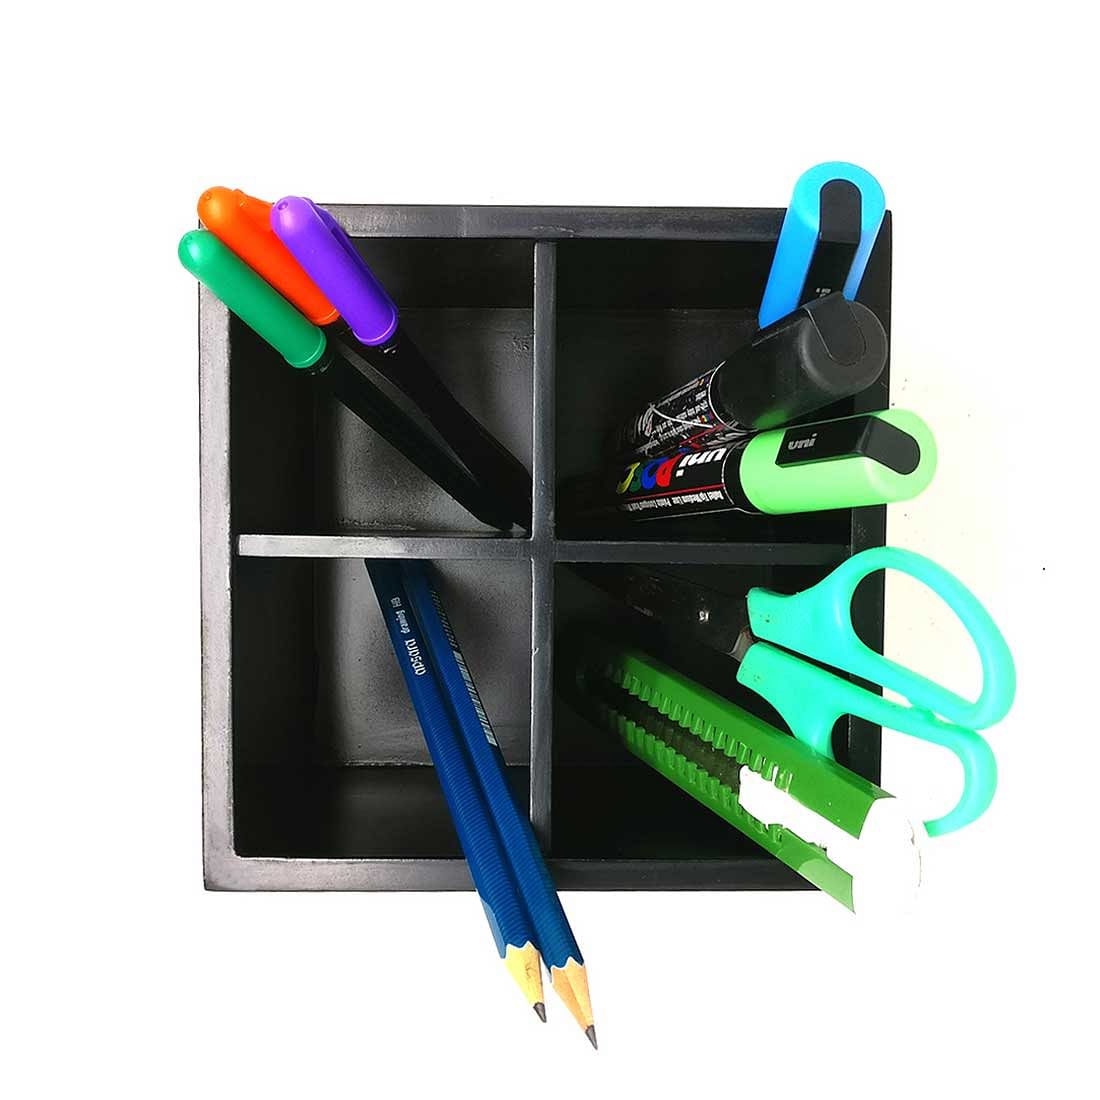 Desk Organizer For Stationery - Clouds of Color Nutcase